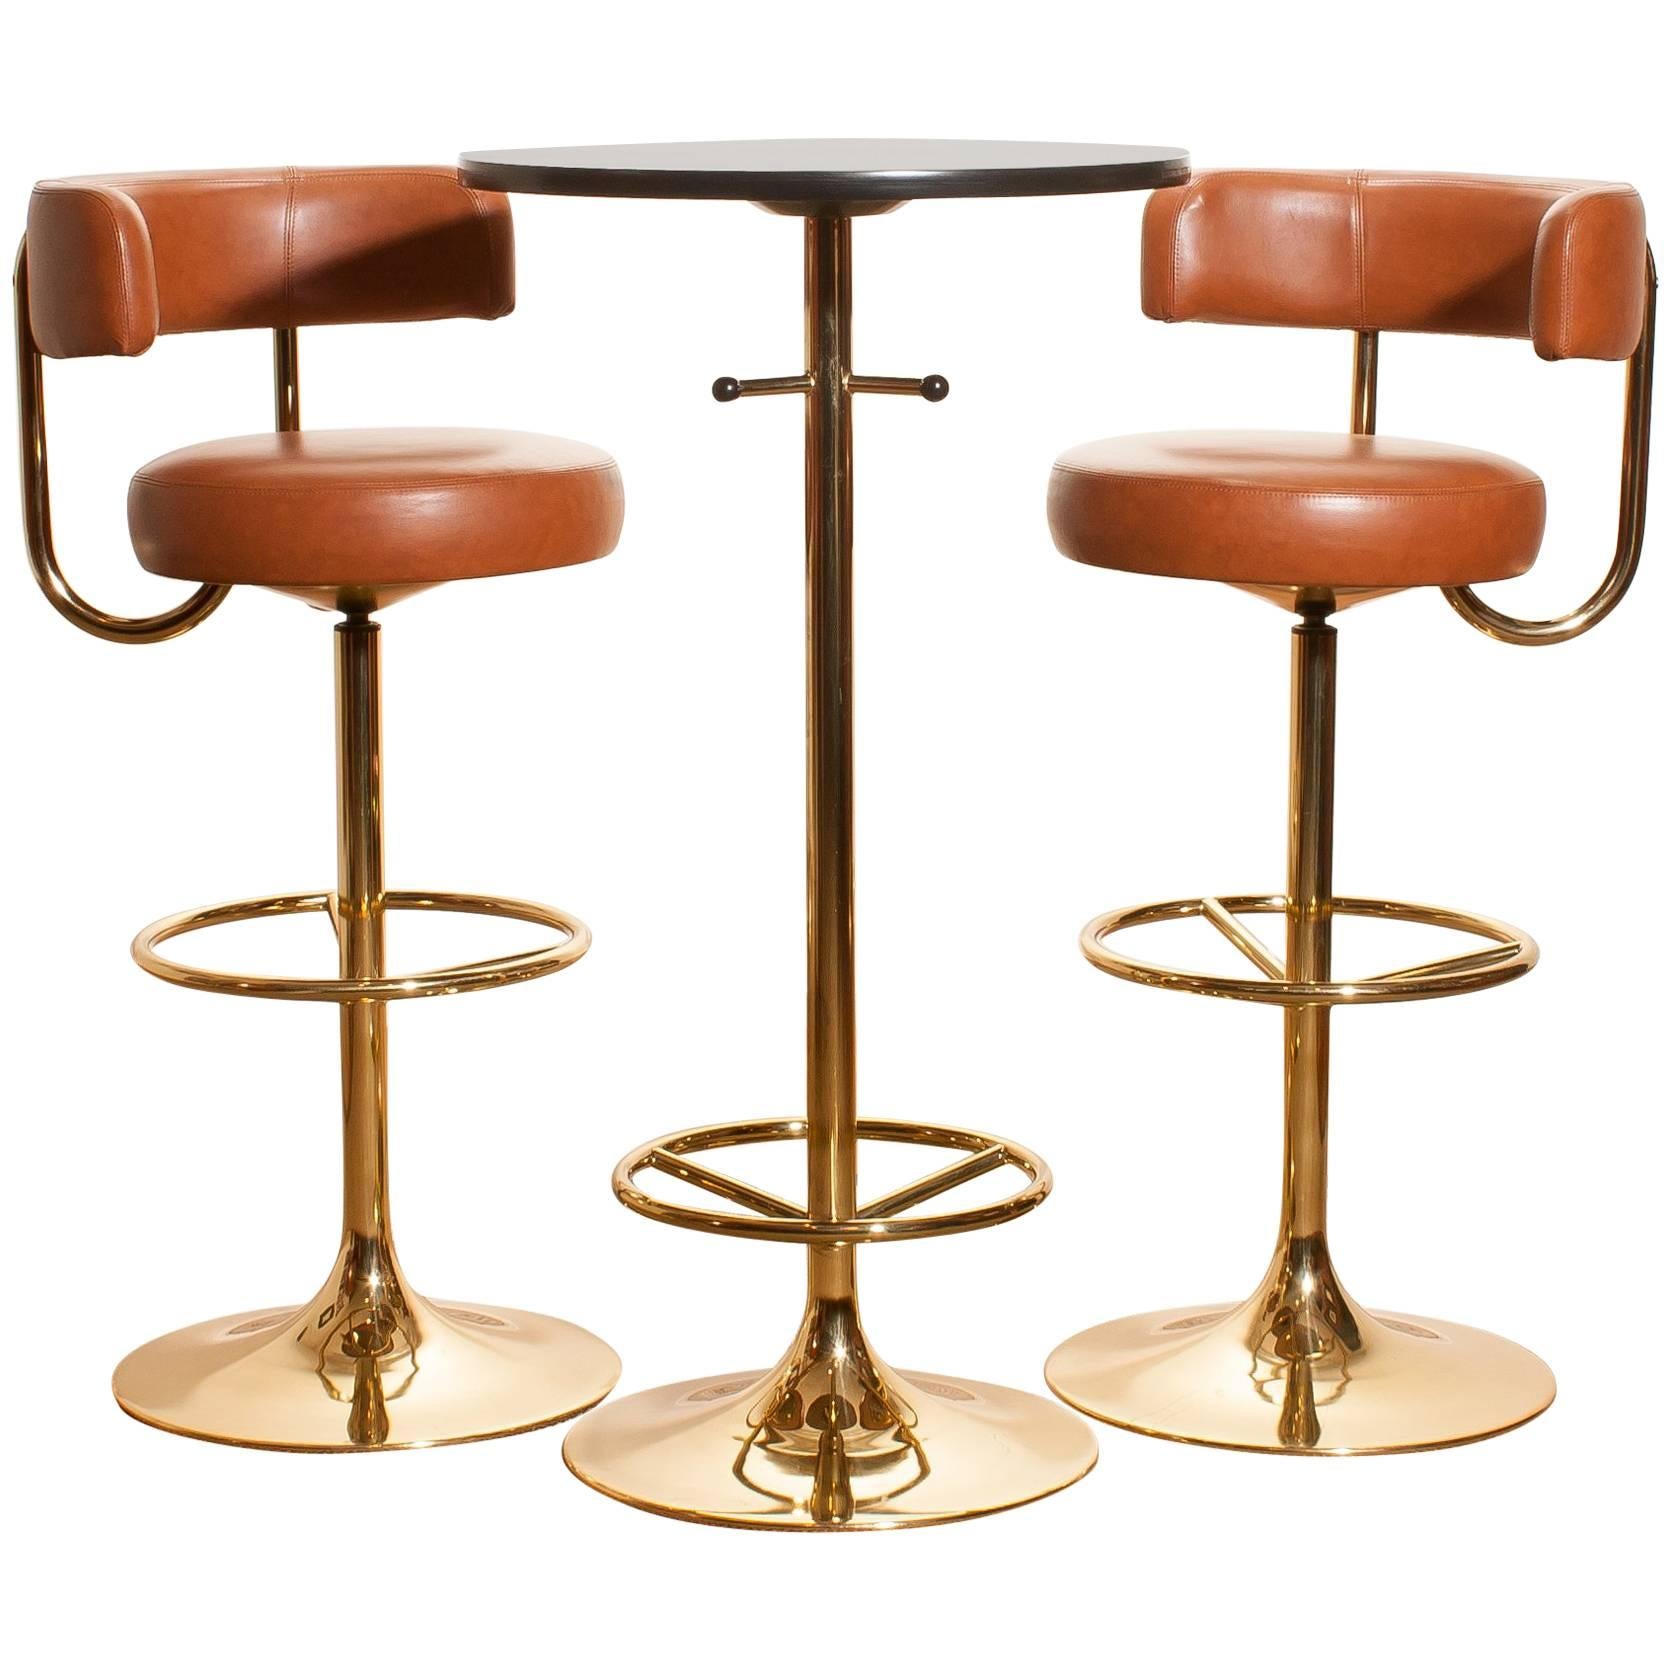 1970s, a Brass Set of Bar Stools and Bar Table by Börje Johanson